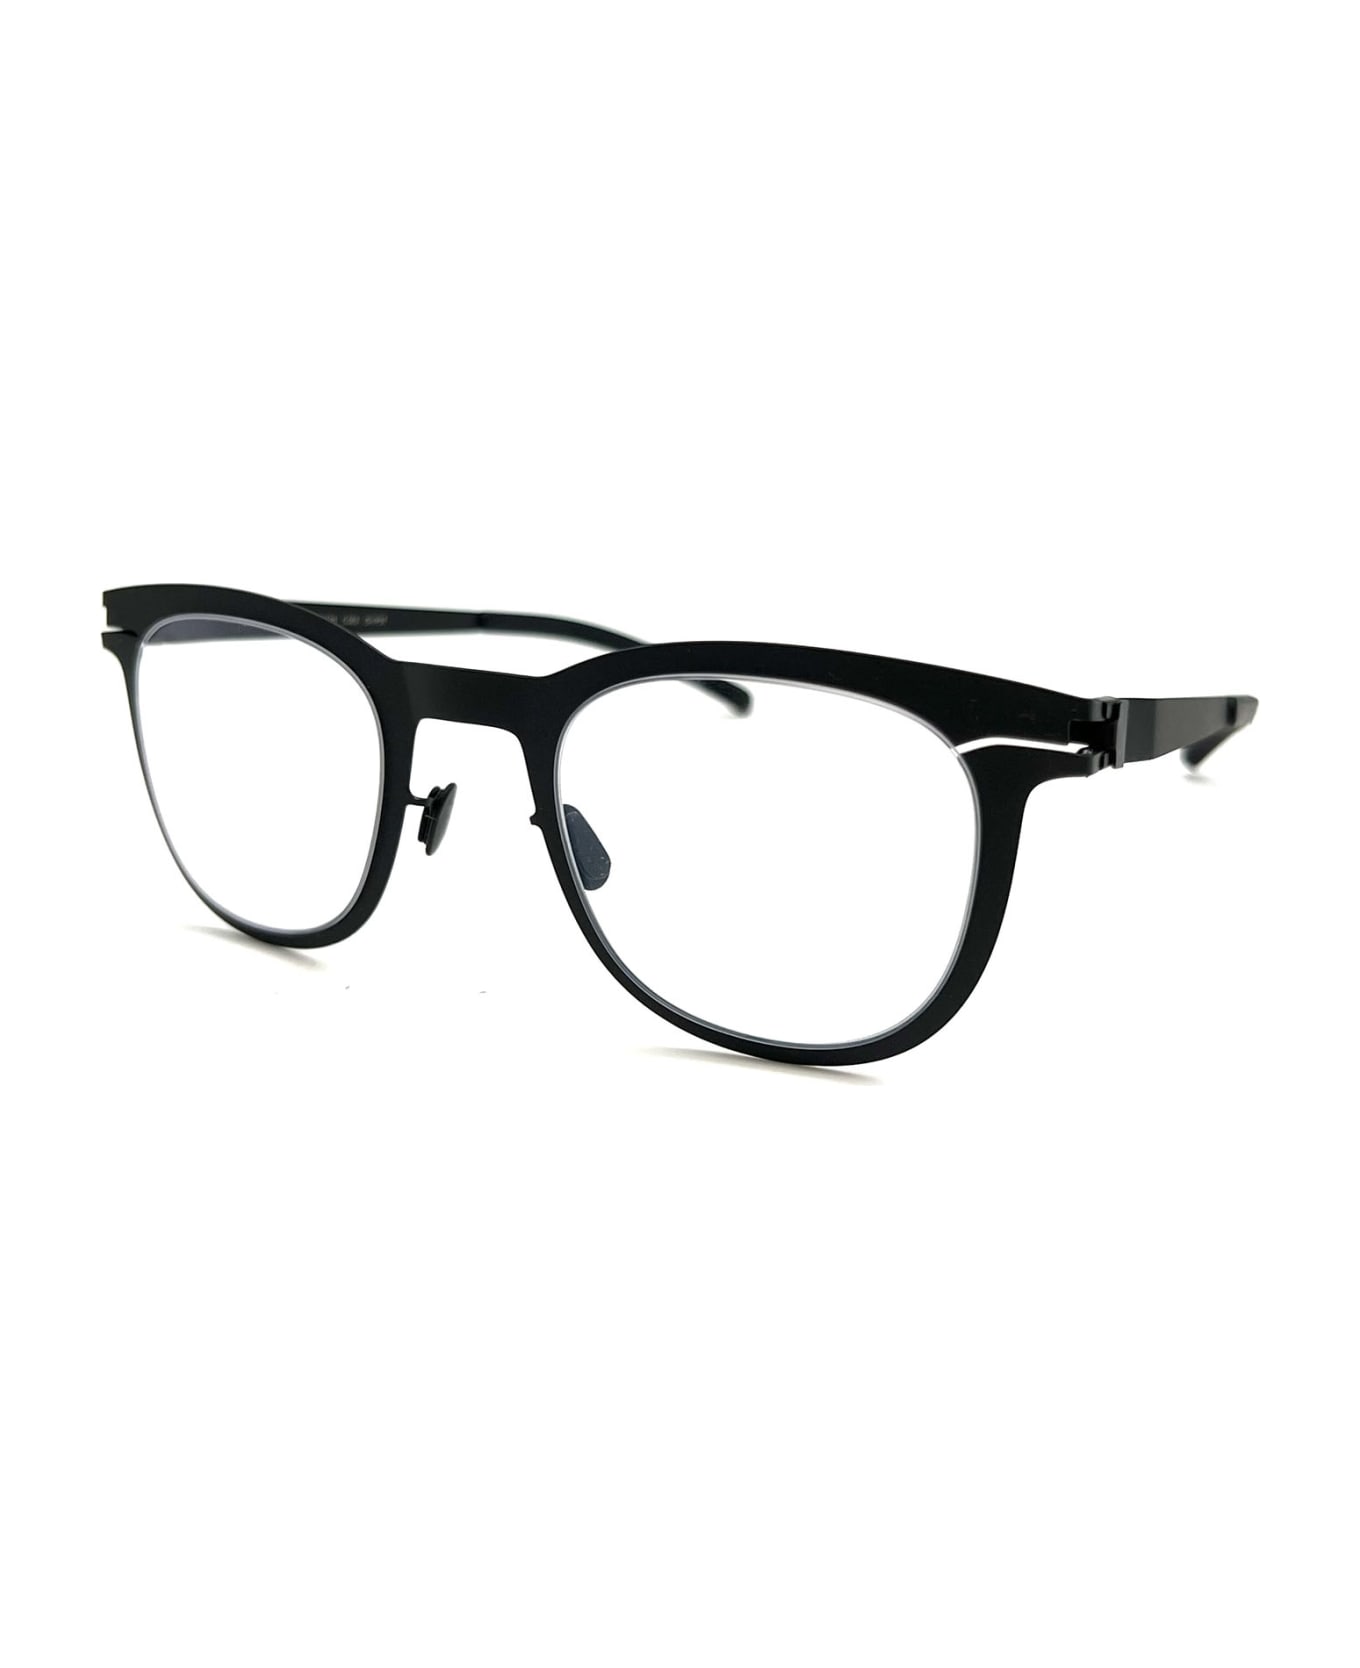 Mykita DELANO Eyewear - Black Clear